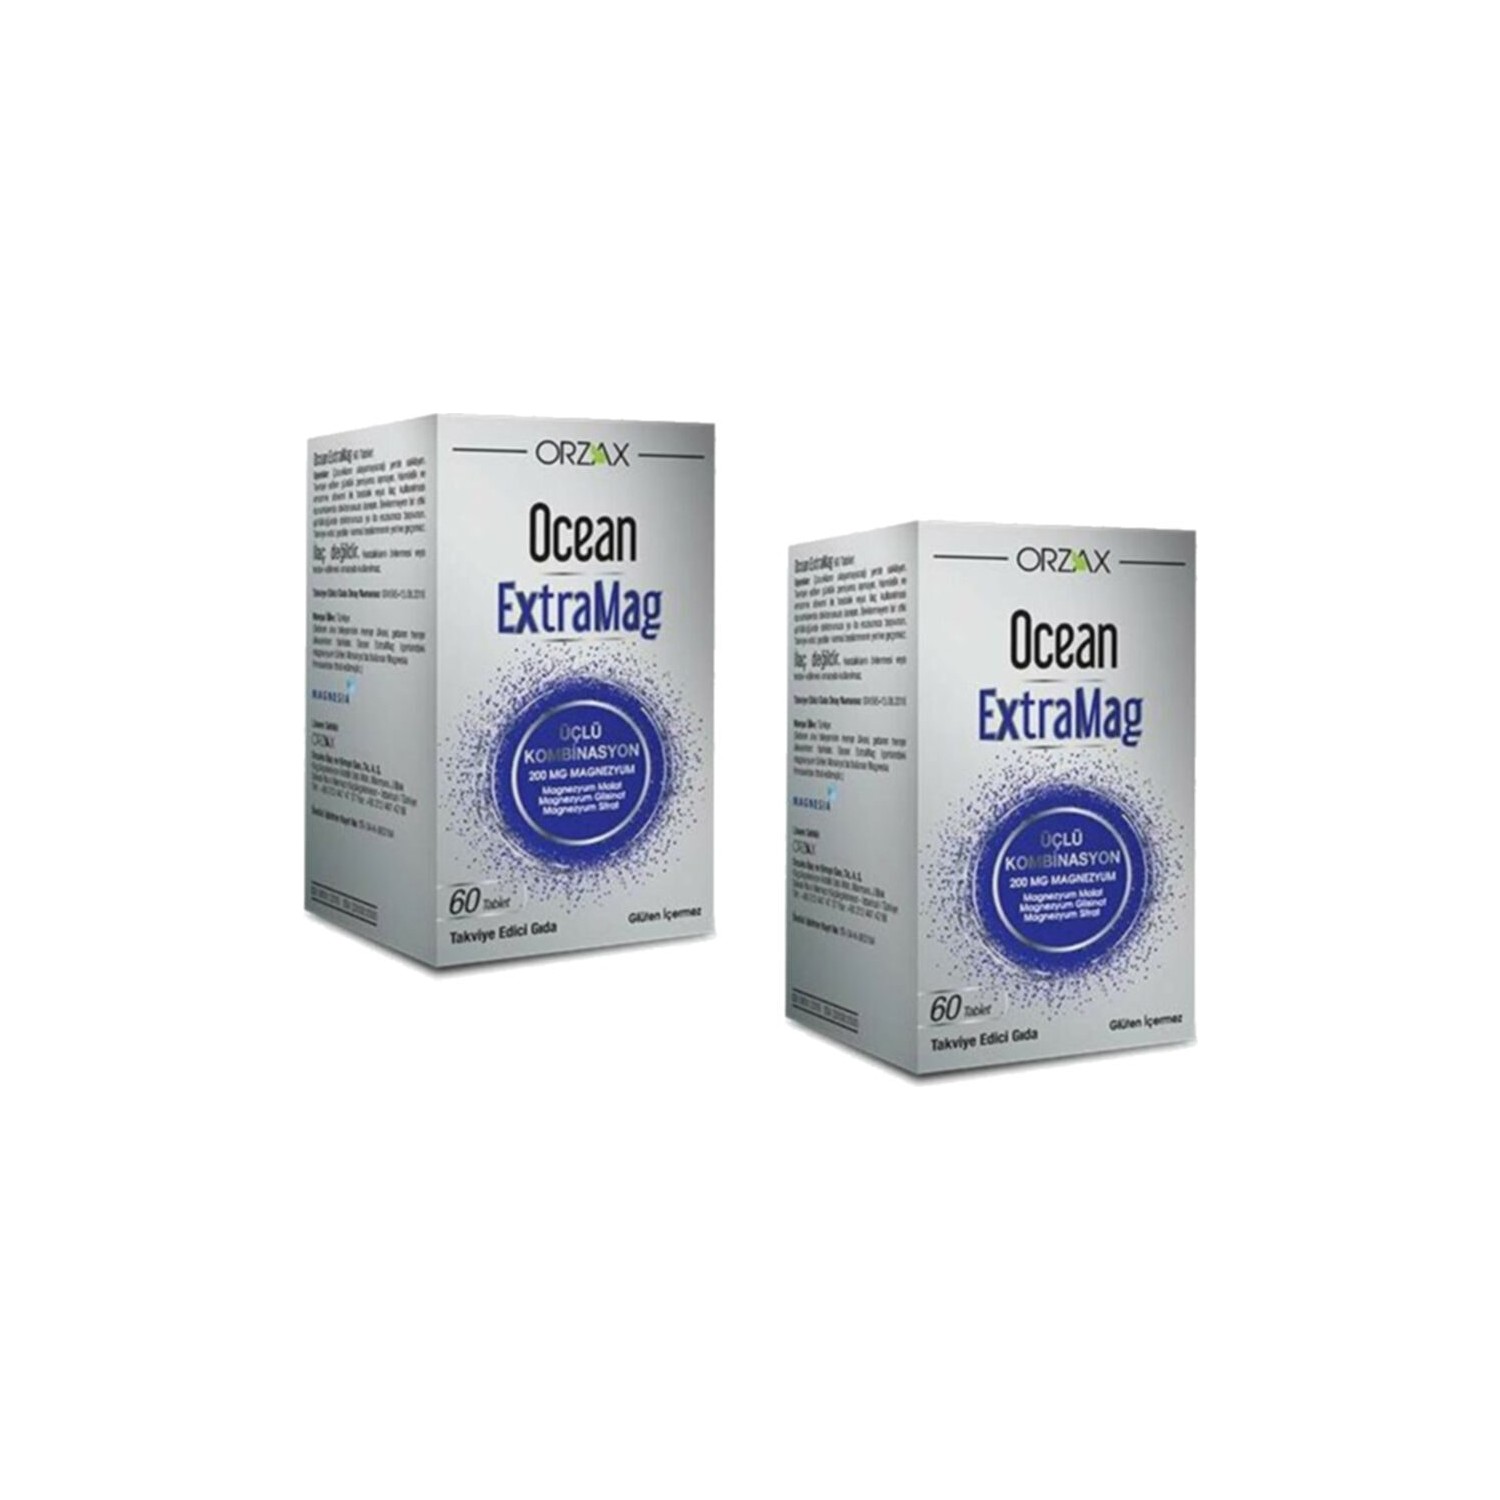 Экстрамаг Ocean, 2 упаковки по 60 таблеток